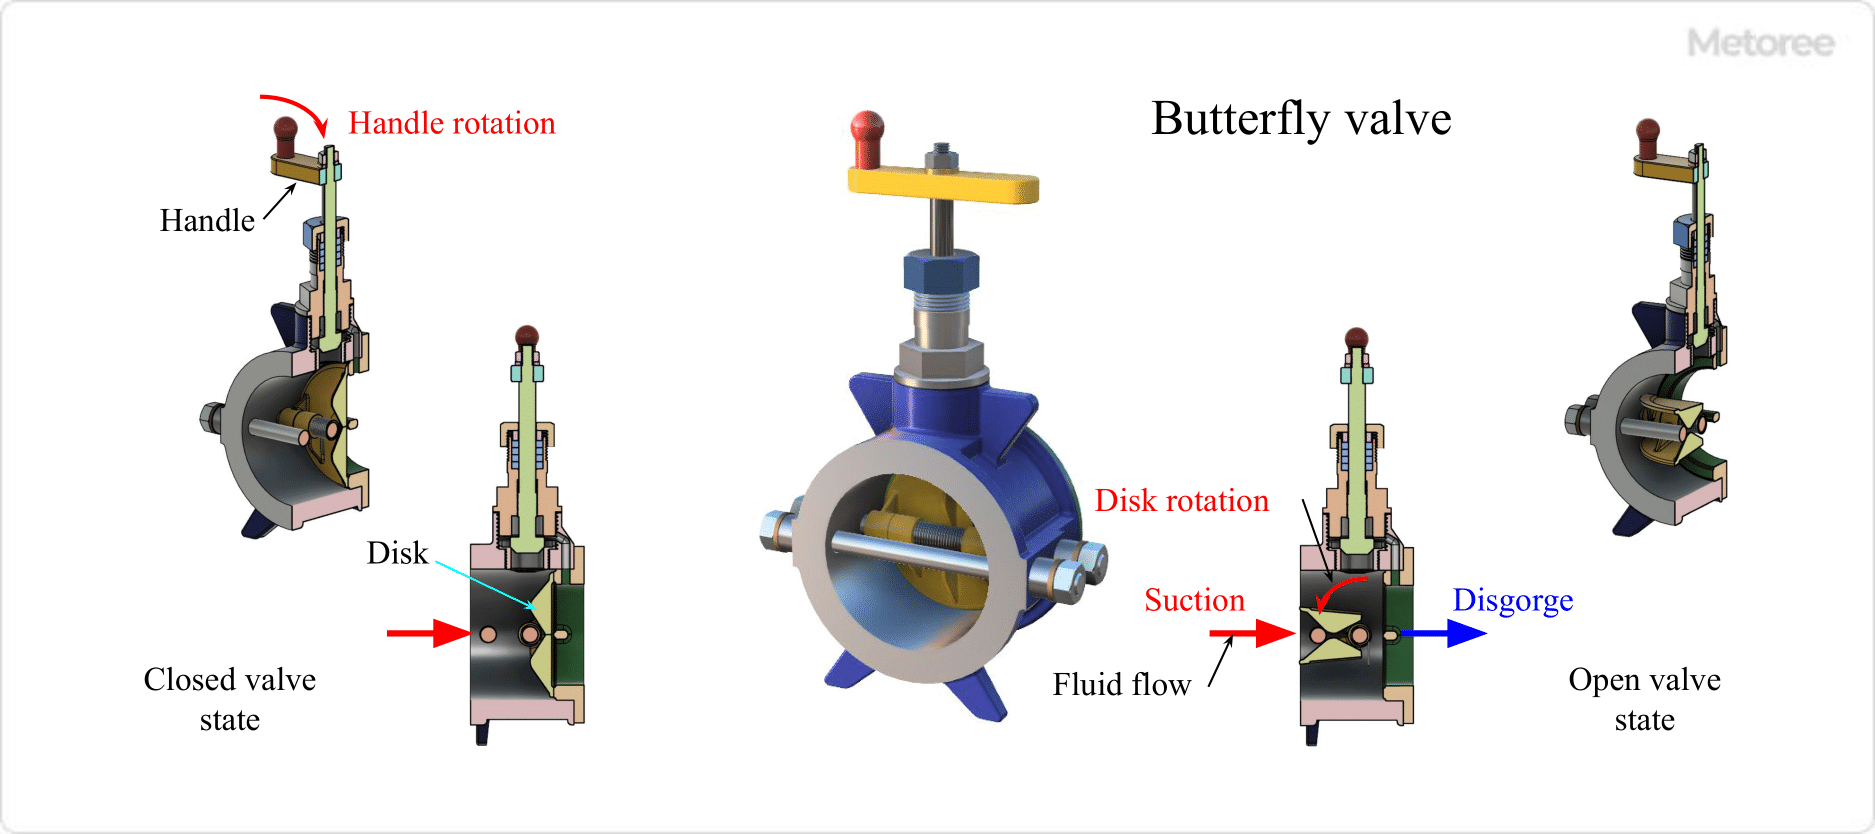 Figure 5. Butterfly valve